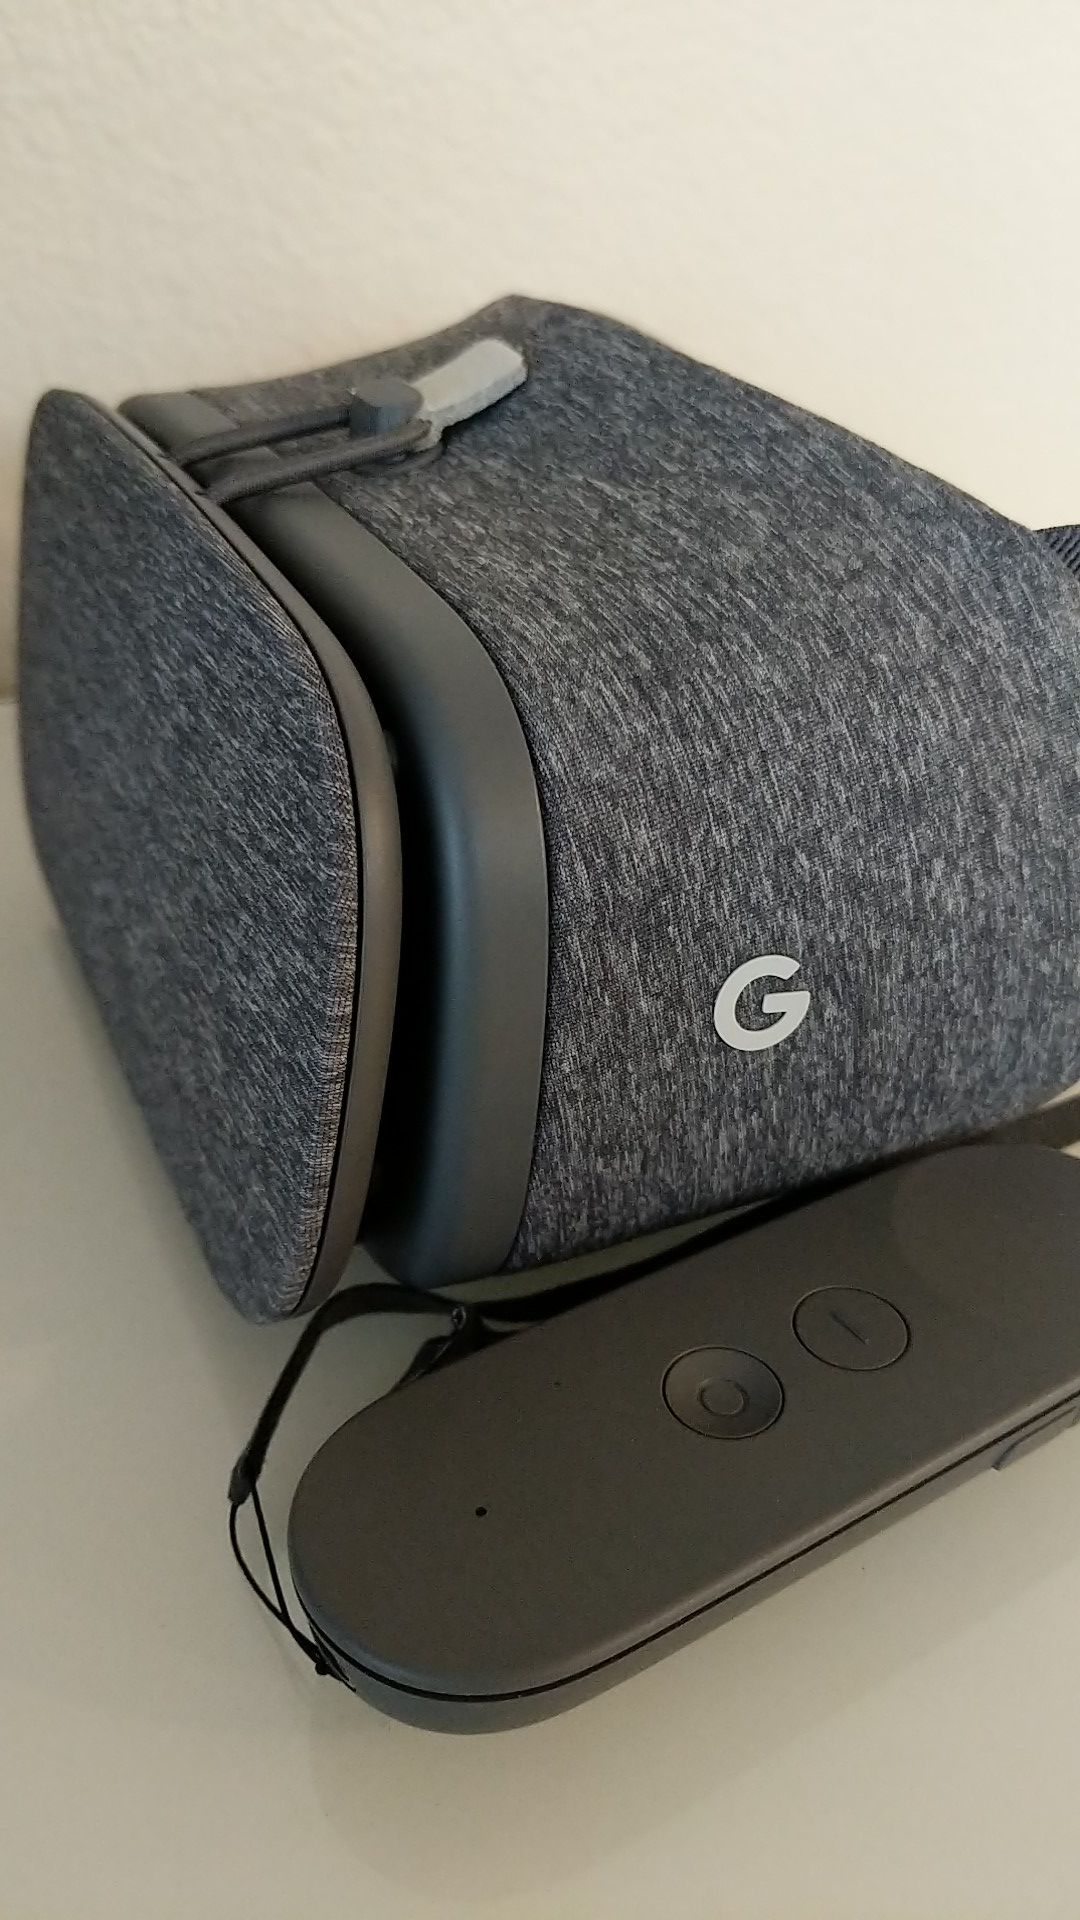 Google Daydream View (2017) Virtual Reality Charcoal Headset